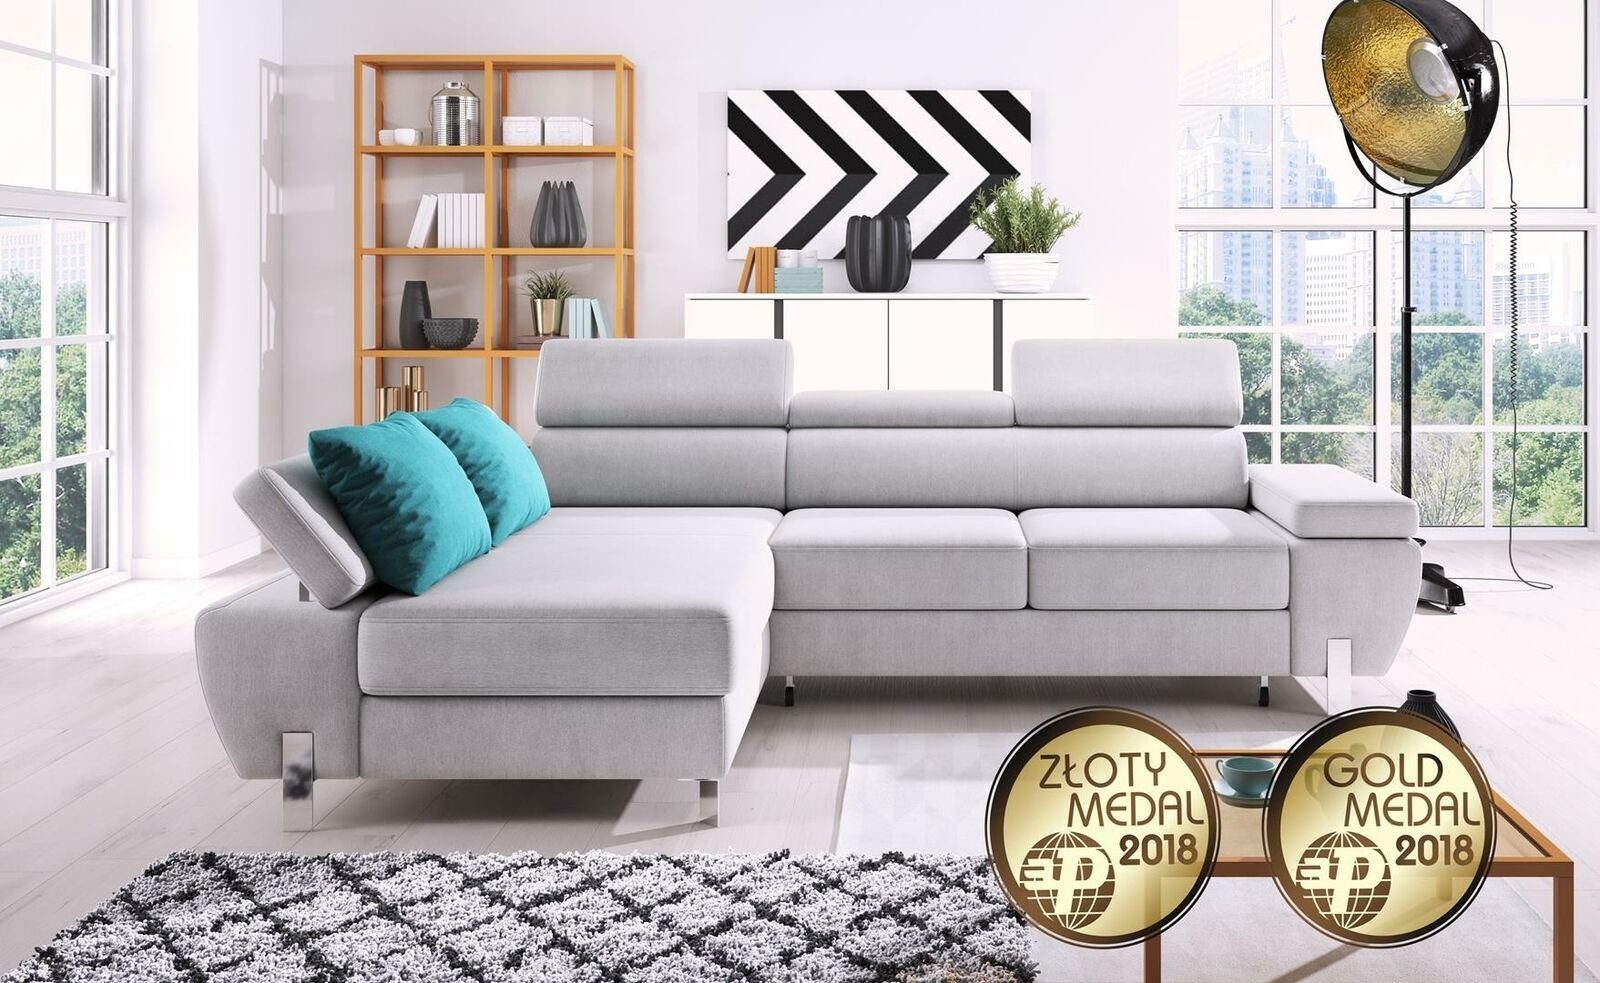 JVmoebel Ecksofa Couch Mit Sofas, Design Ecksofa Schlafsofa Bettfunktion Grau L-form Textil Bettfunktion